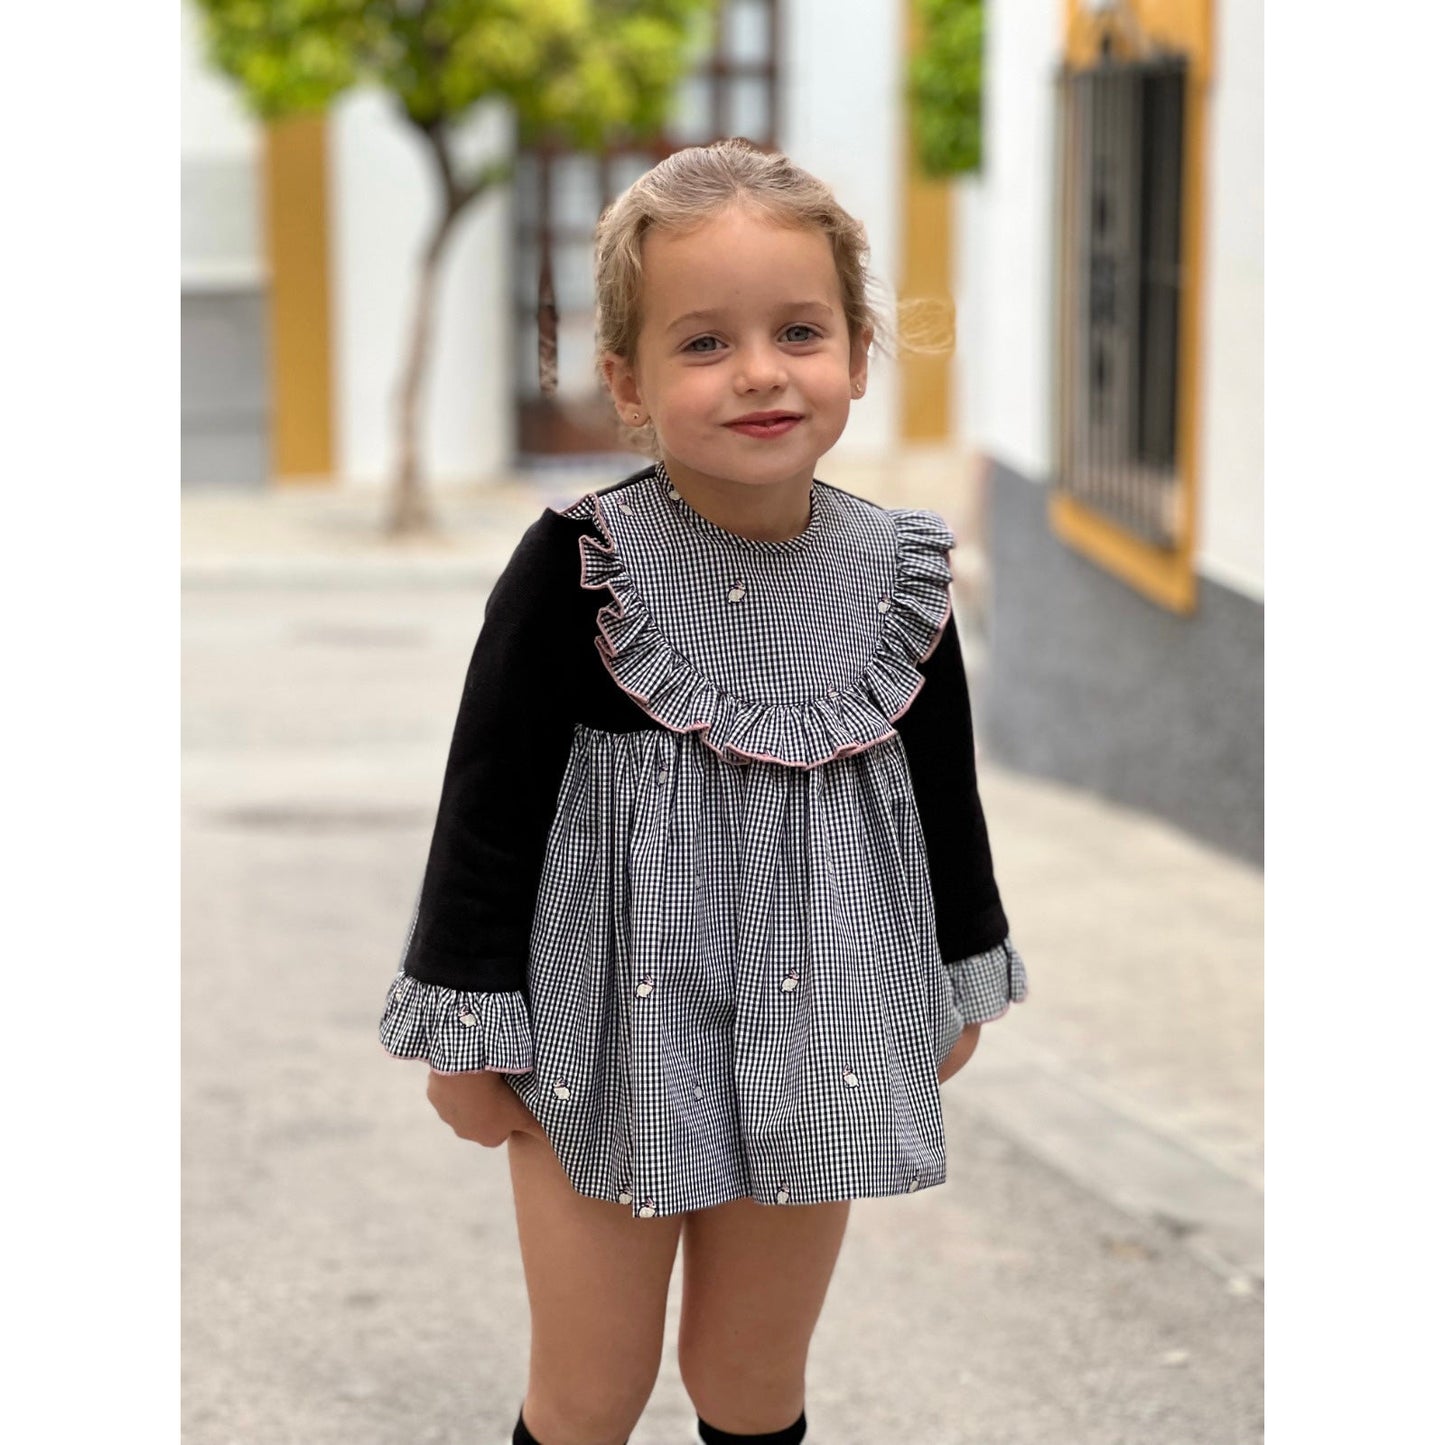 La Peppa Moda Infantil Spanish Clothing – Adora Childrenswear